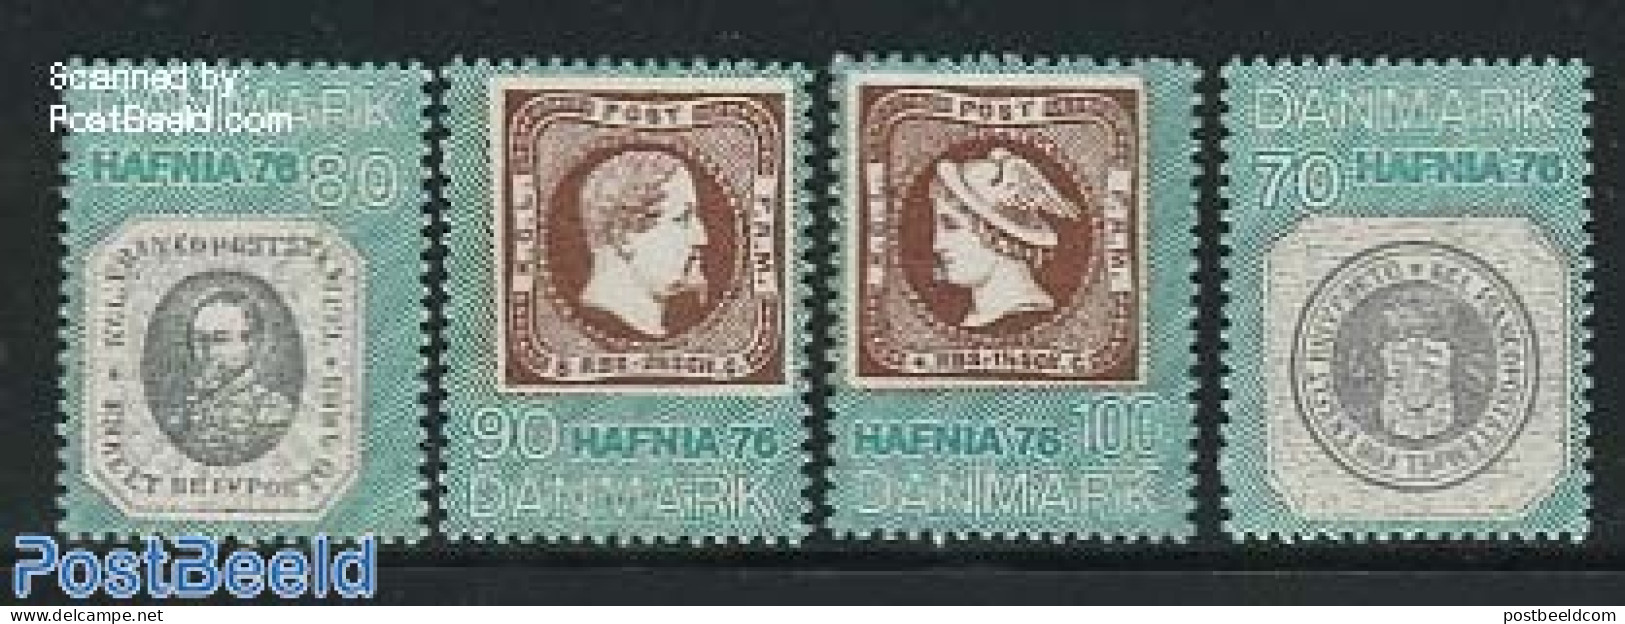 Denmark 1975 Hafnia 76 4v, Mint NH, Stamps On Stamps - Unused Stamps